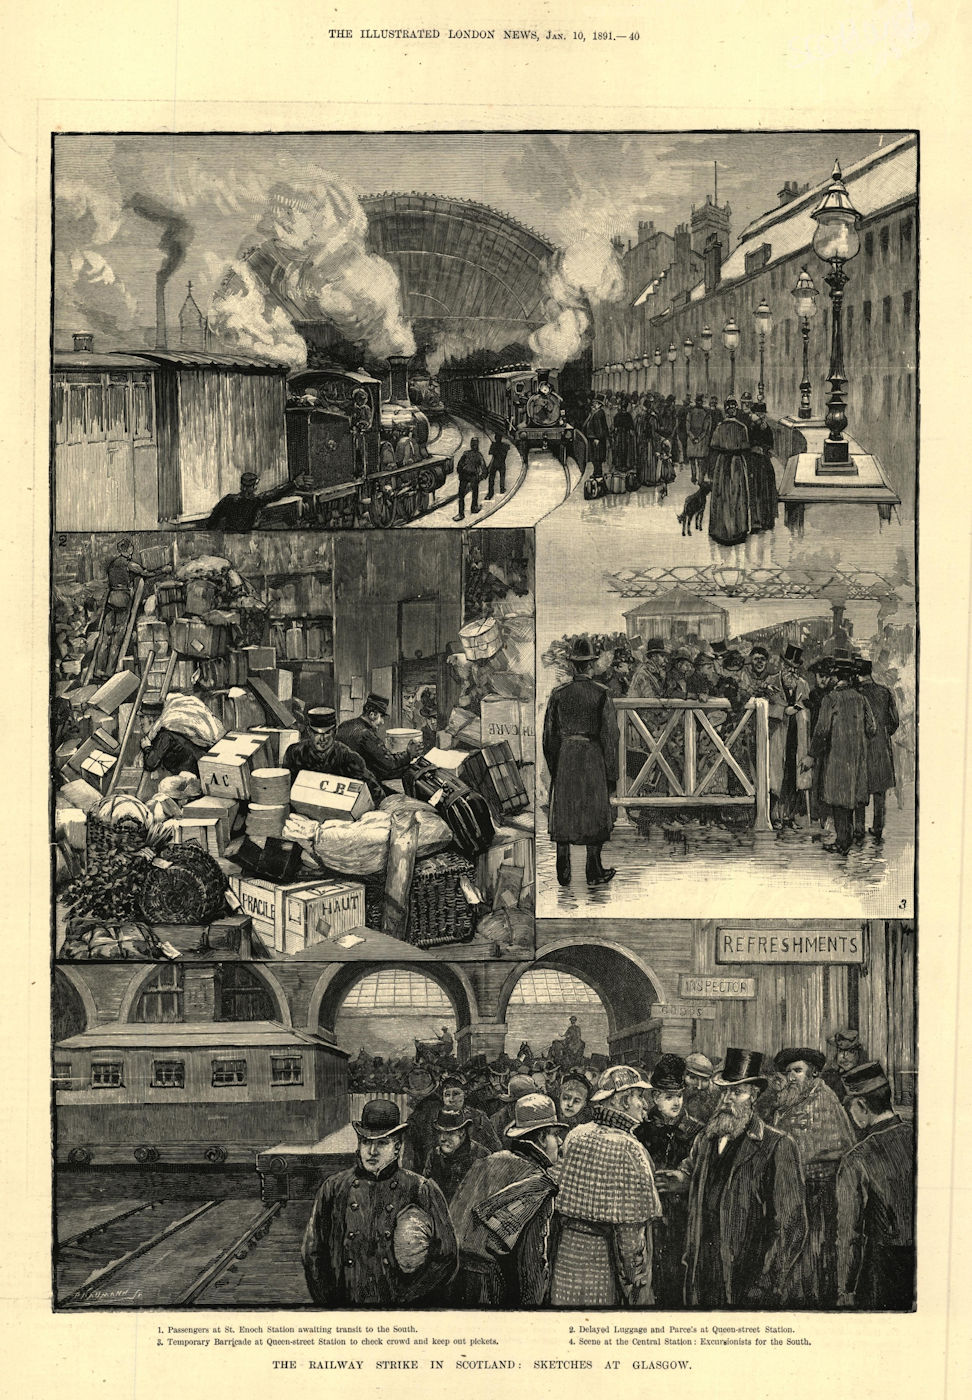 Scotland rail strike. Glasgow St. Enoch Queen-St. Central Stations pickets 1891